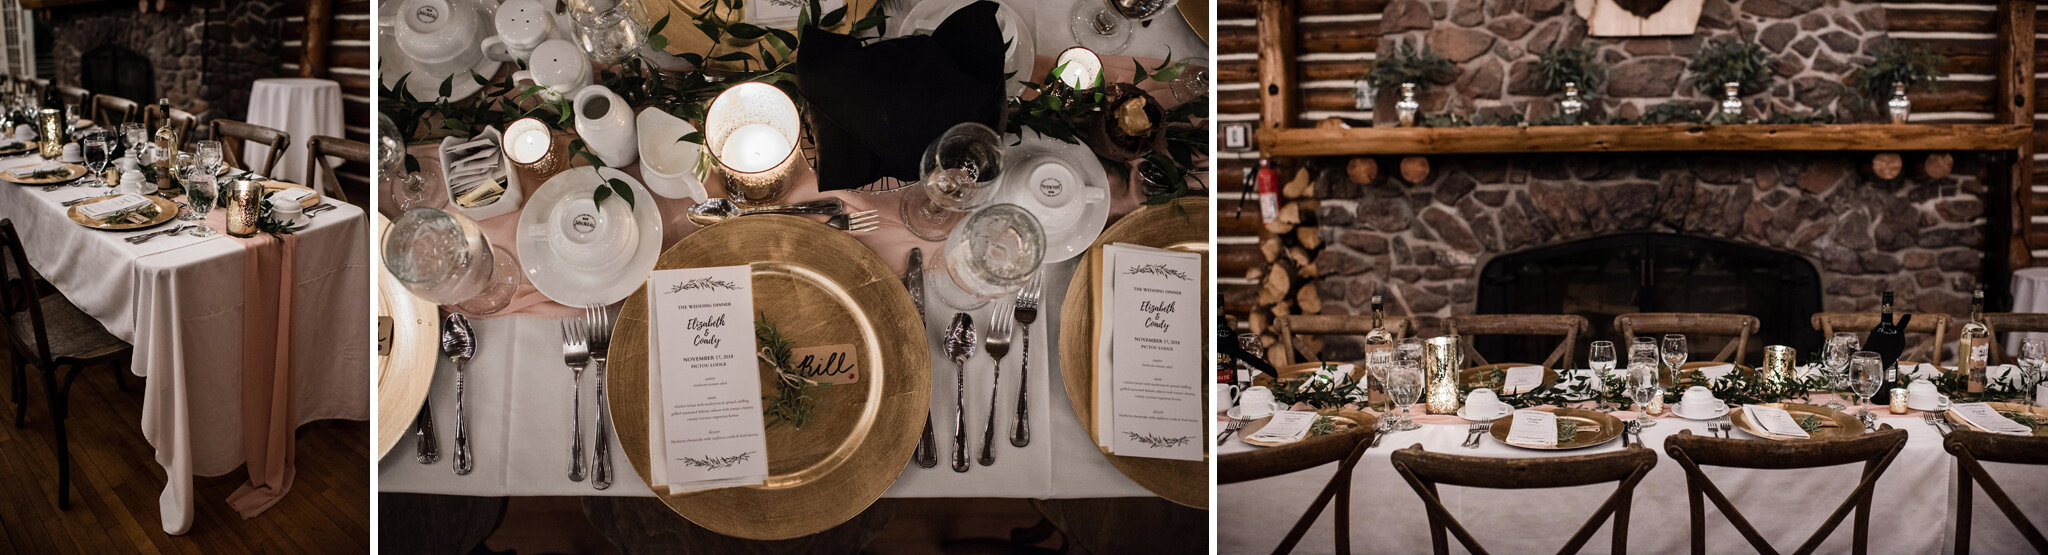 282-table-plate-setting-dinner-cross-back-chairs-winter-wedding-pictou-lodge-toronto.jpg